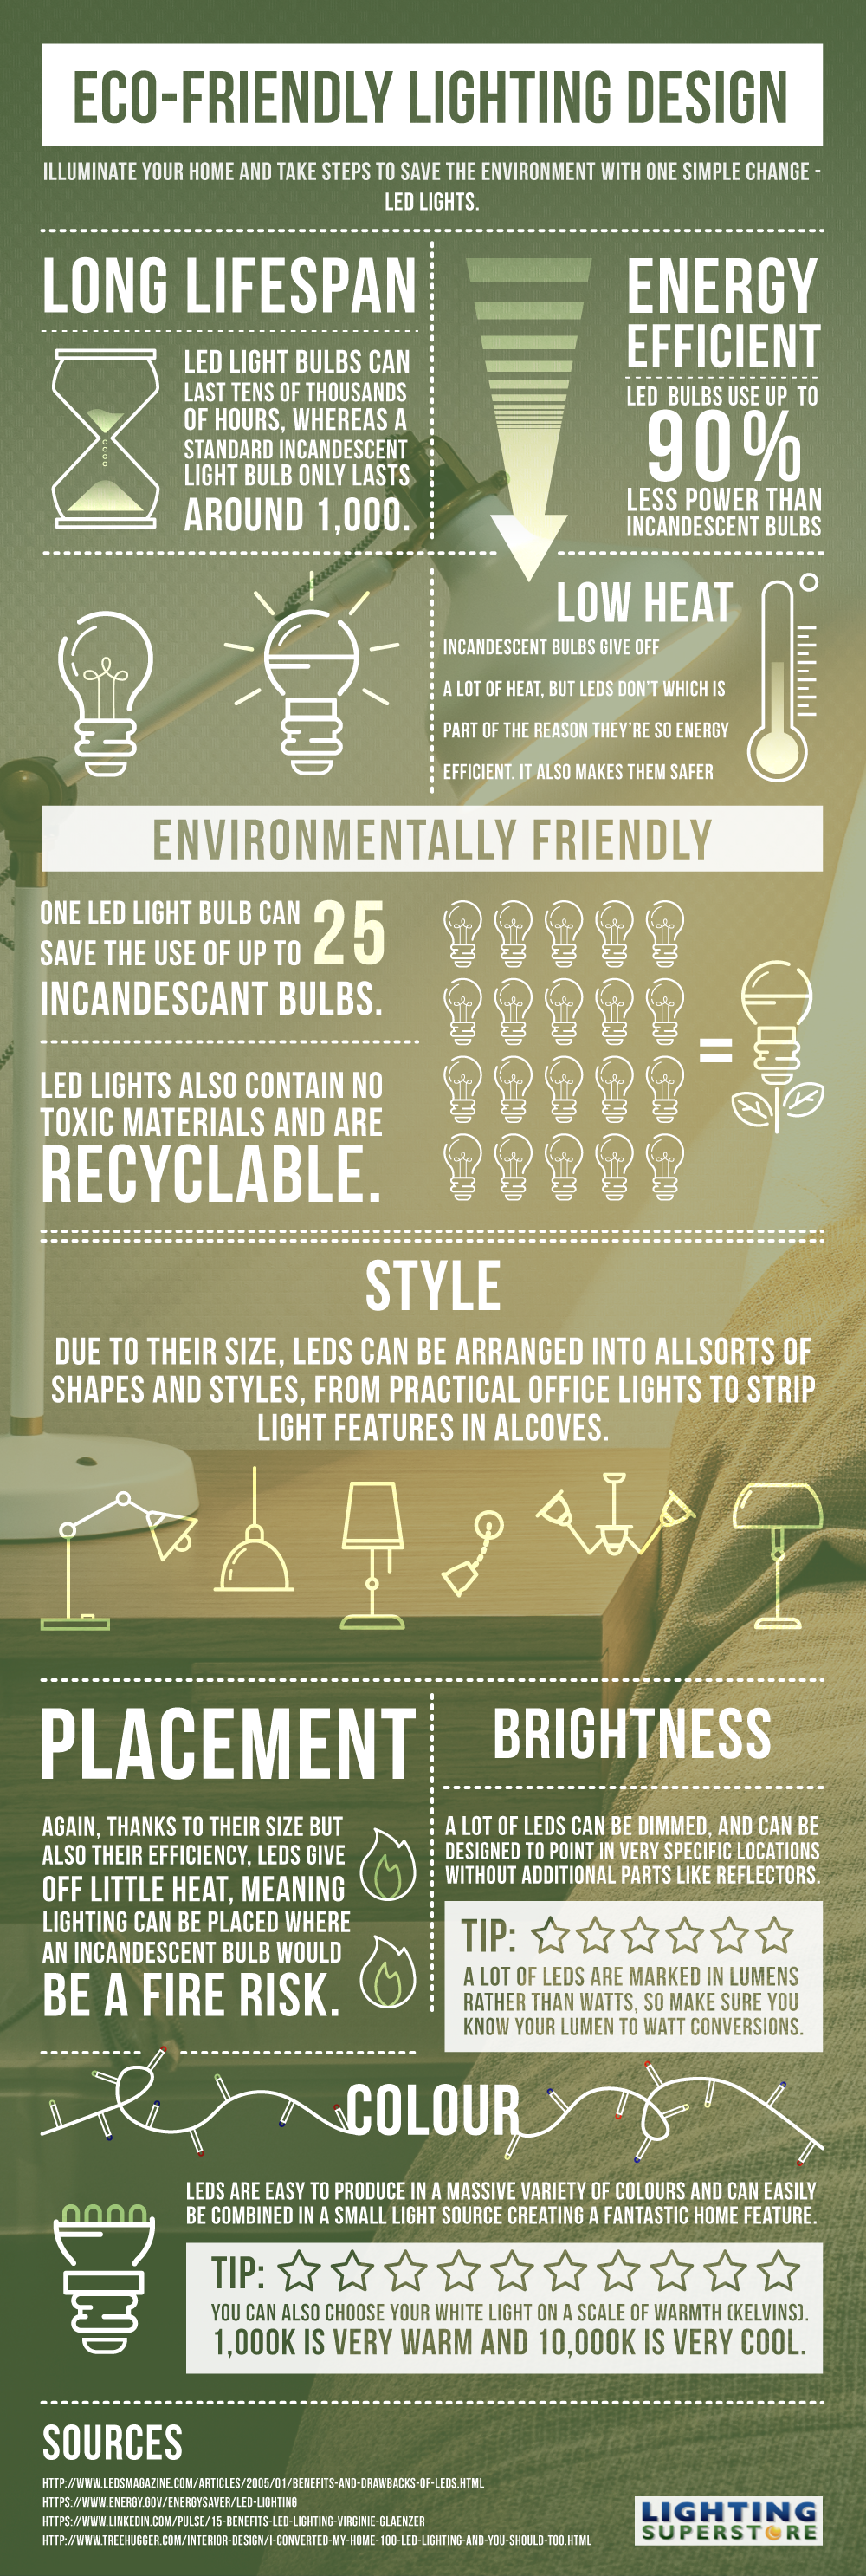 TLS eco-friendly lighting design